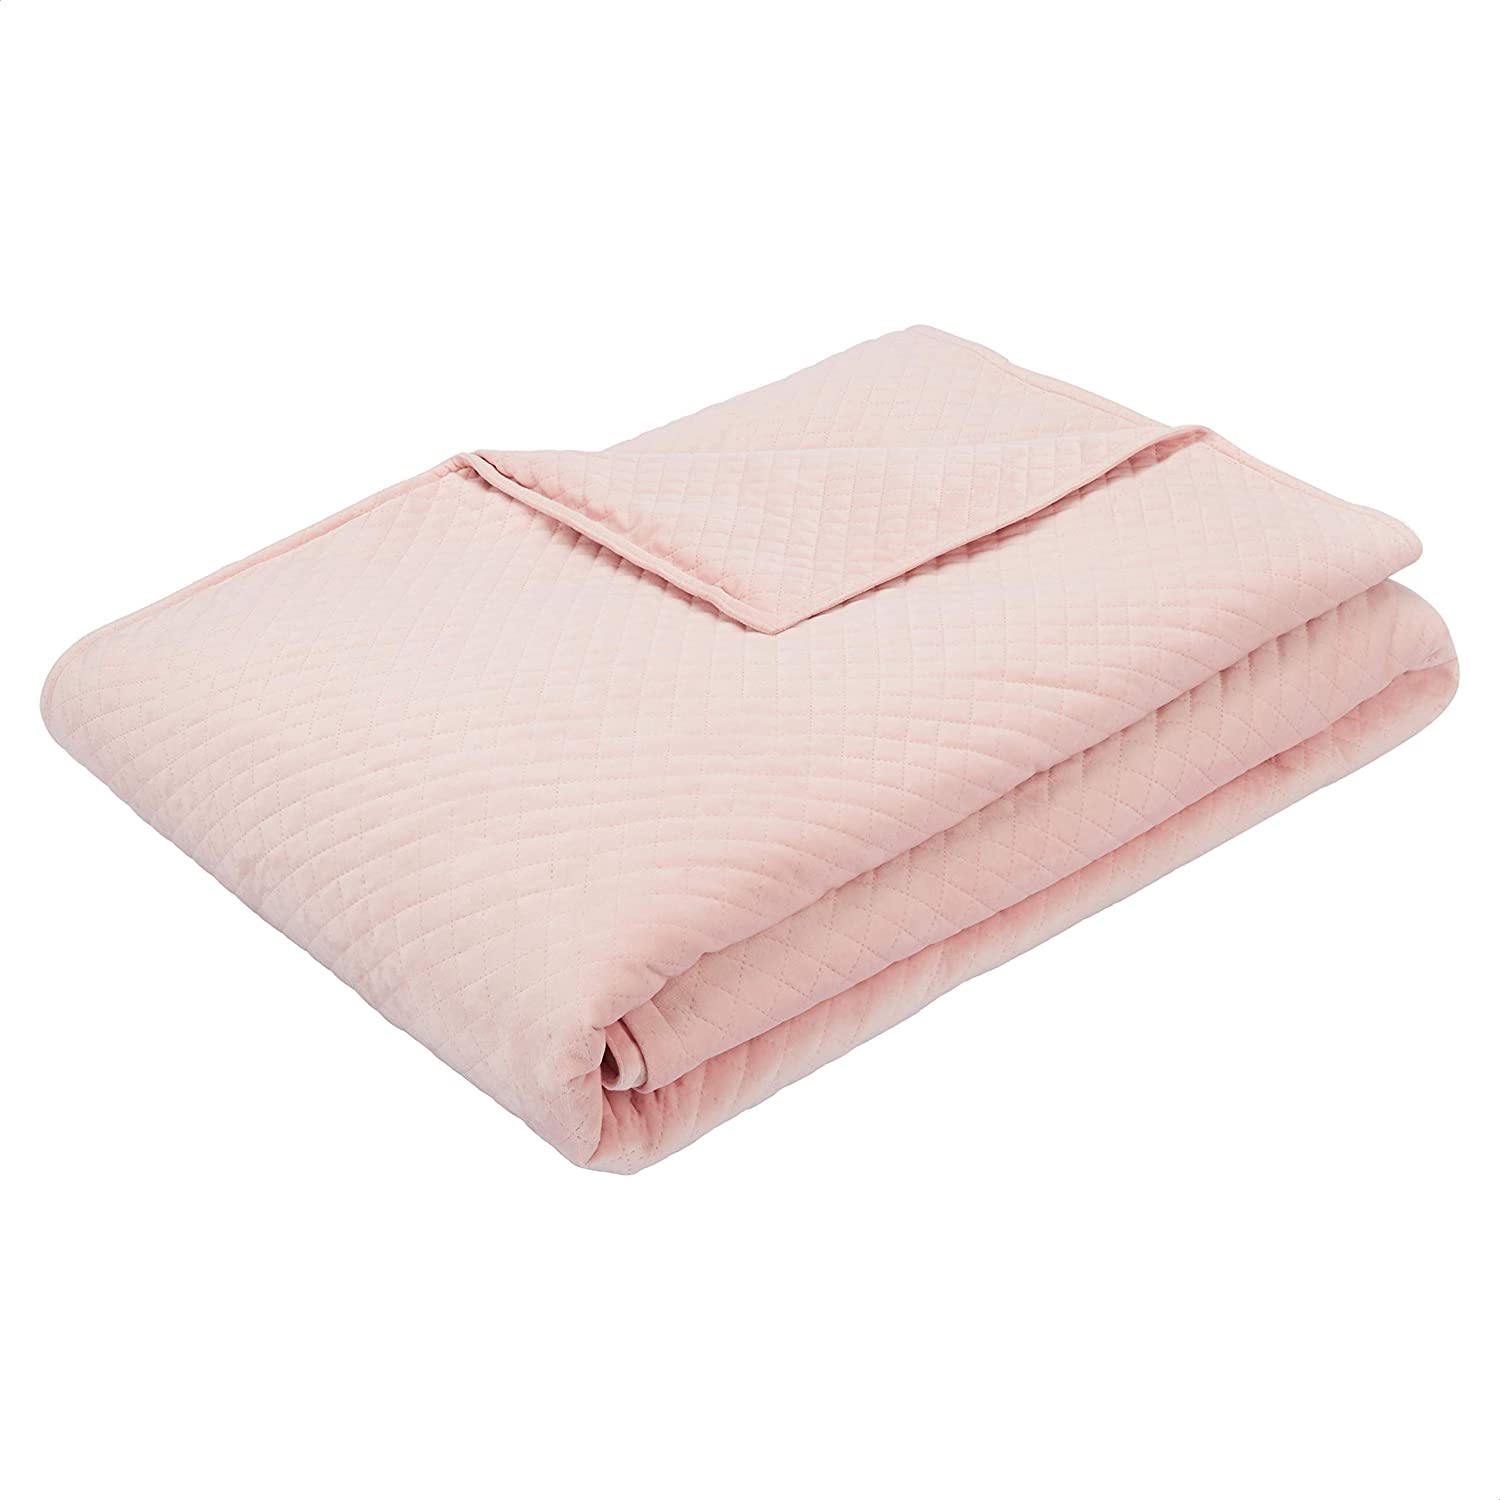 amazon basics blanket cover